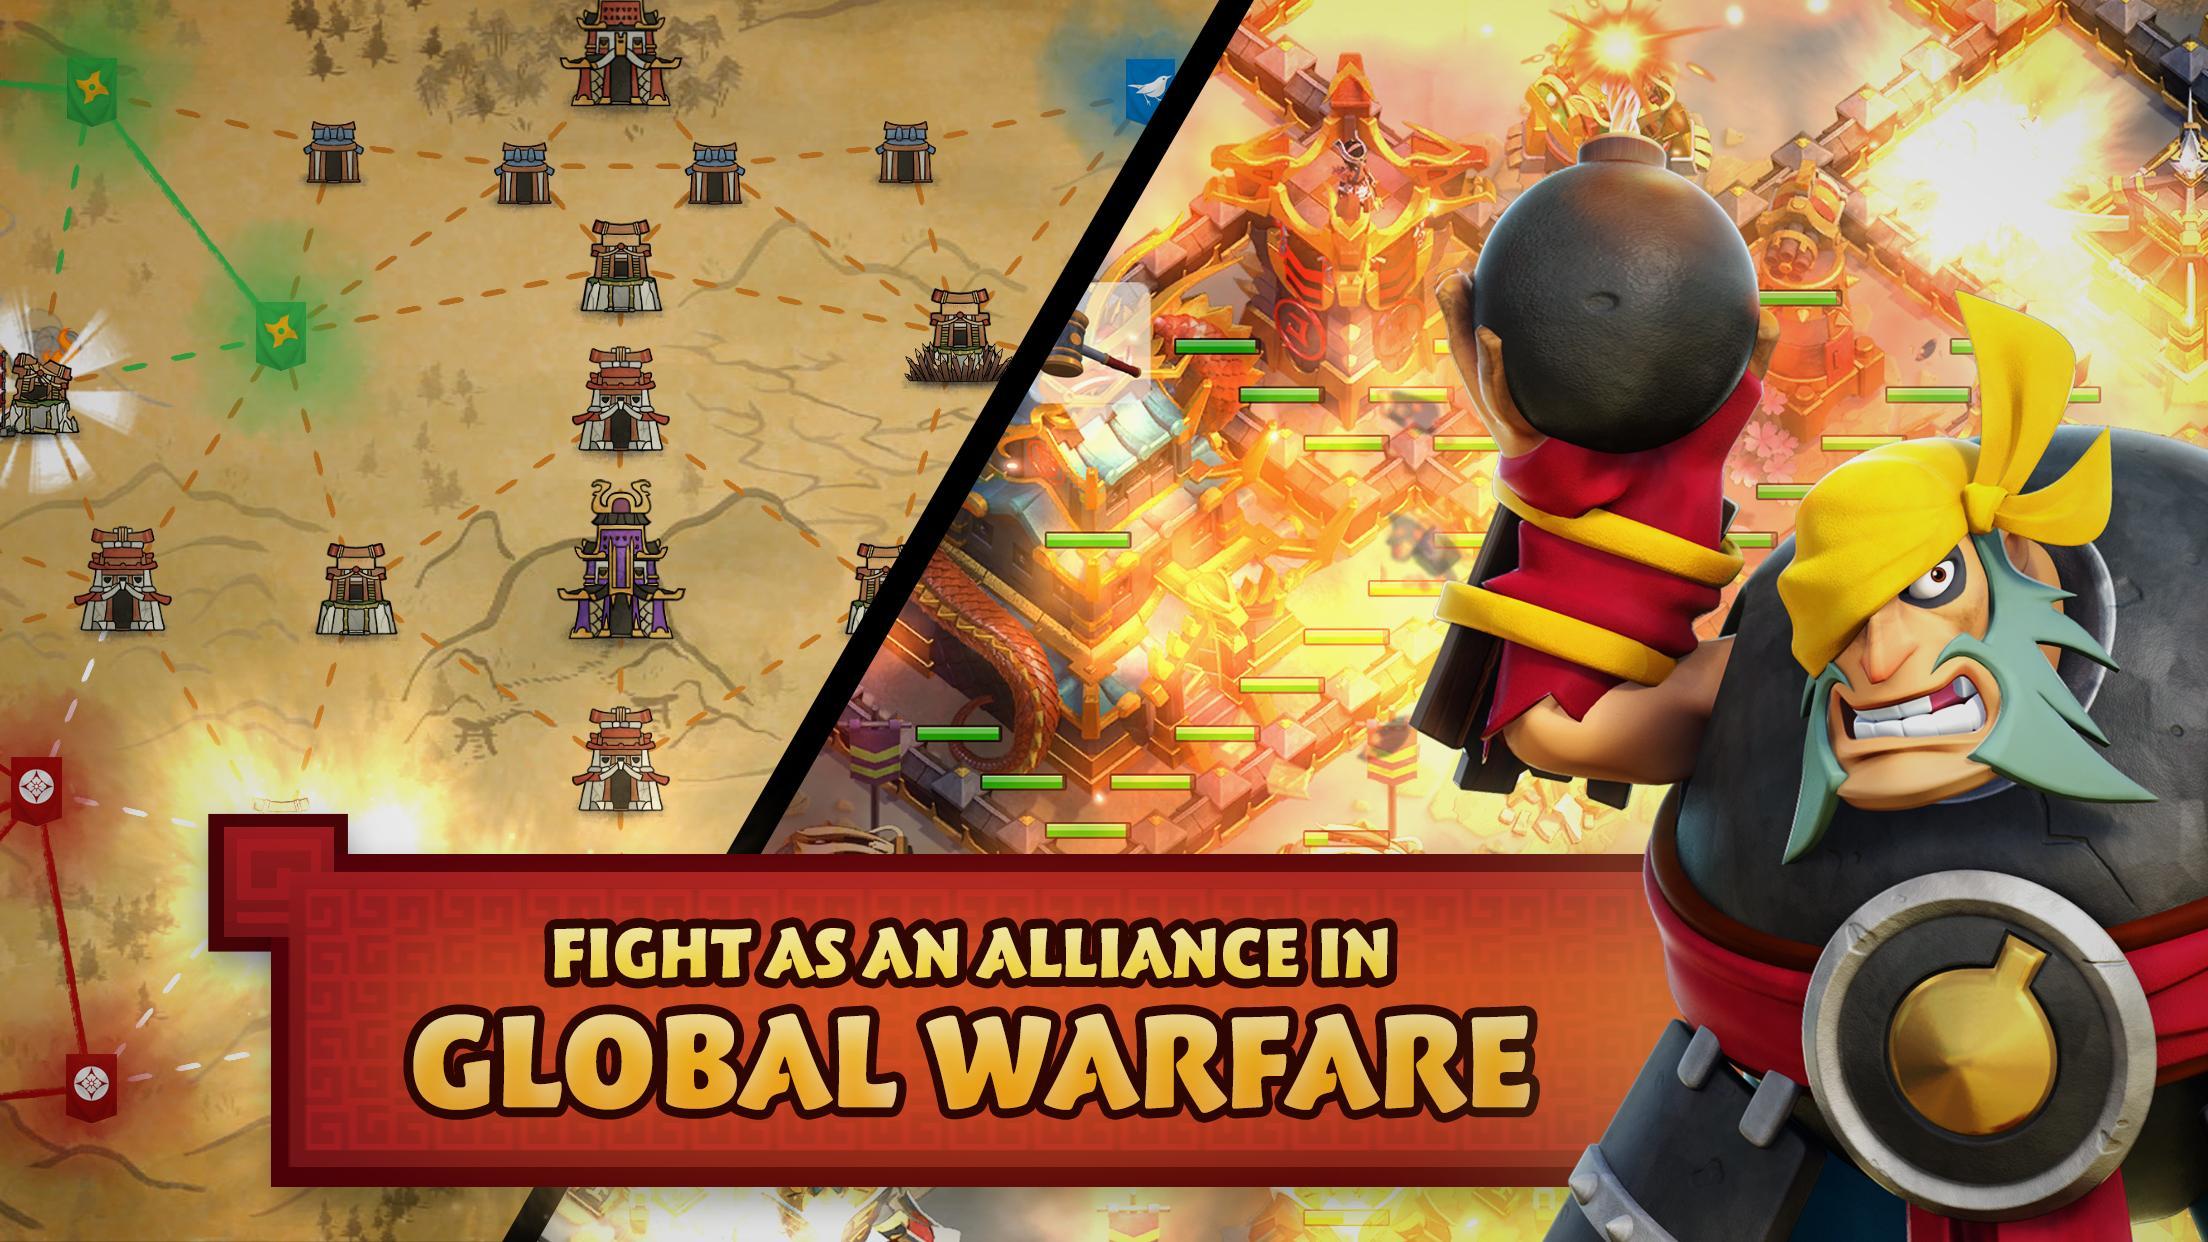 Epic War - Castle Alliance - Apps on Google Play